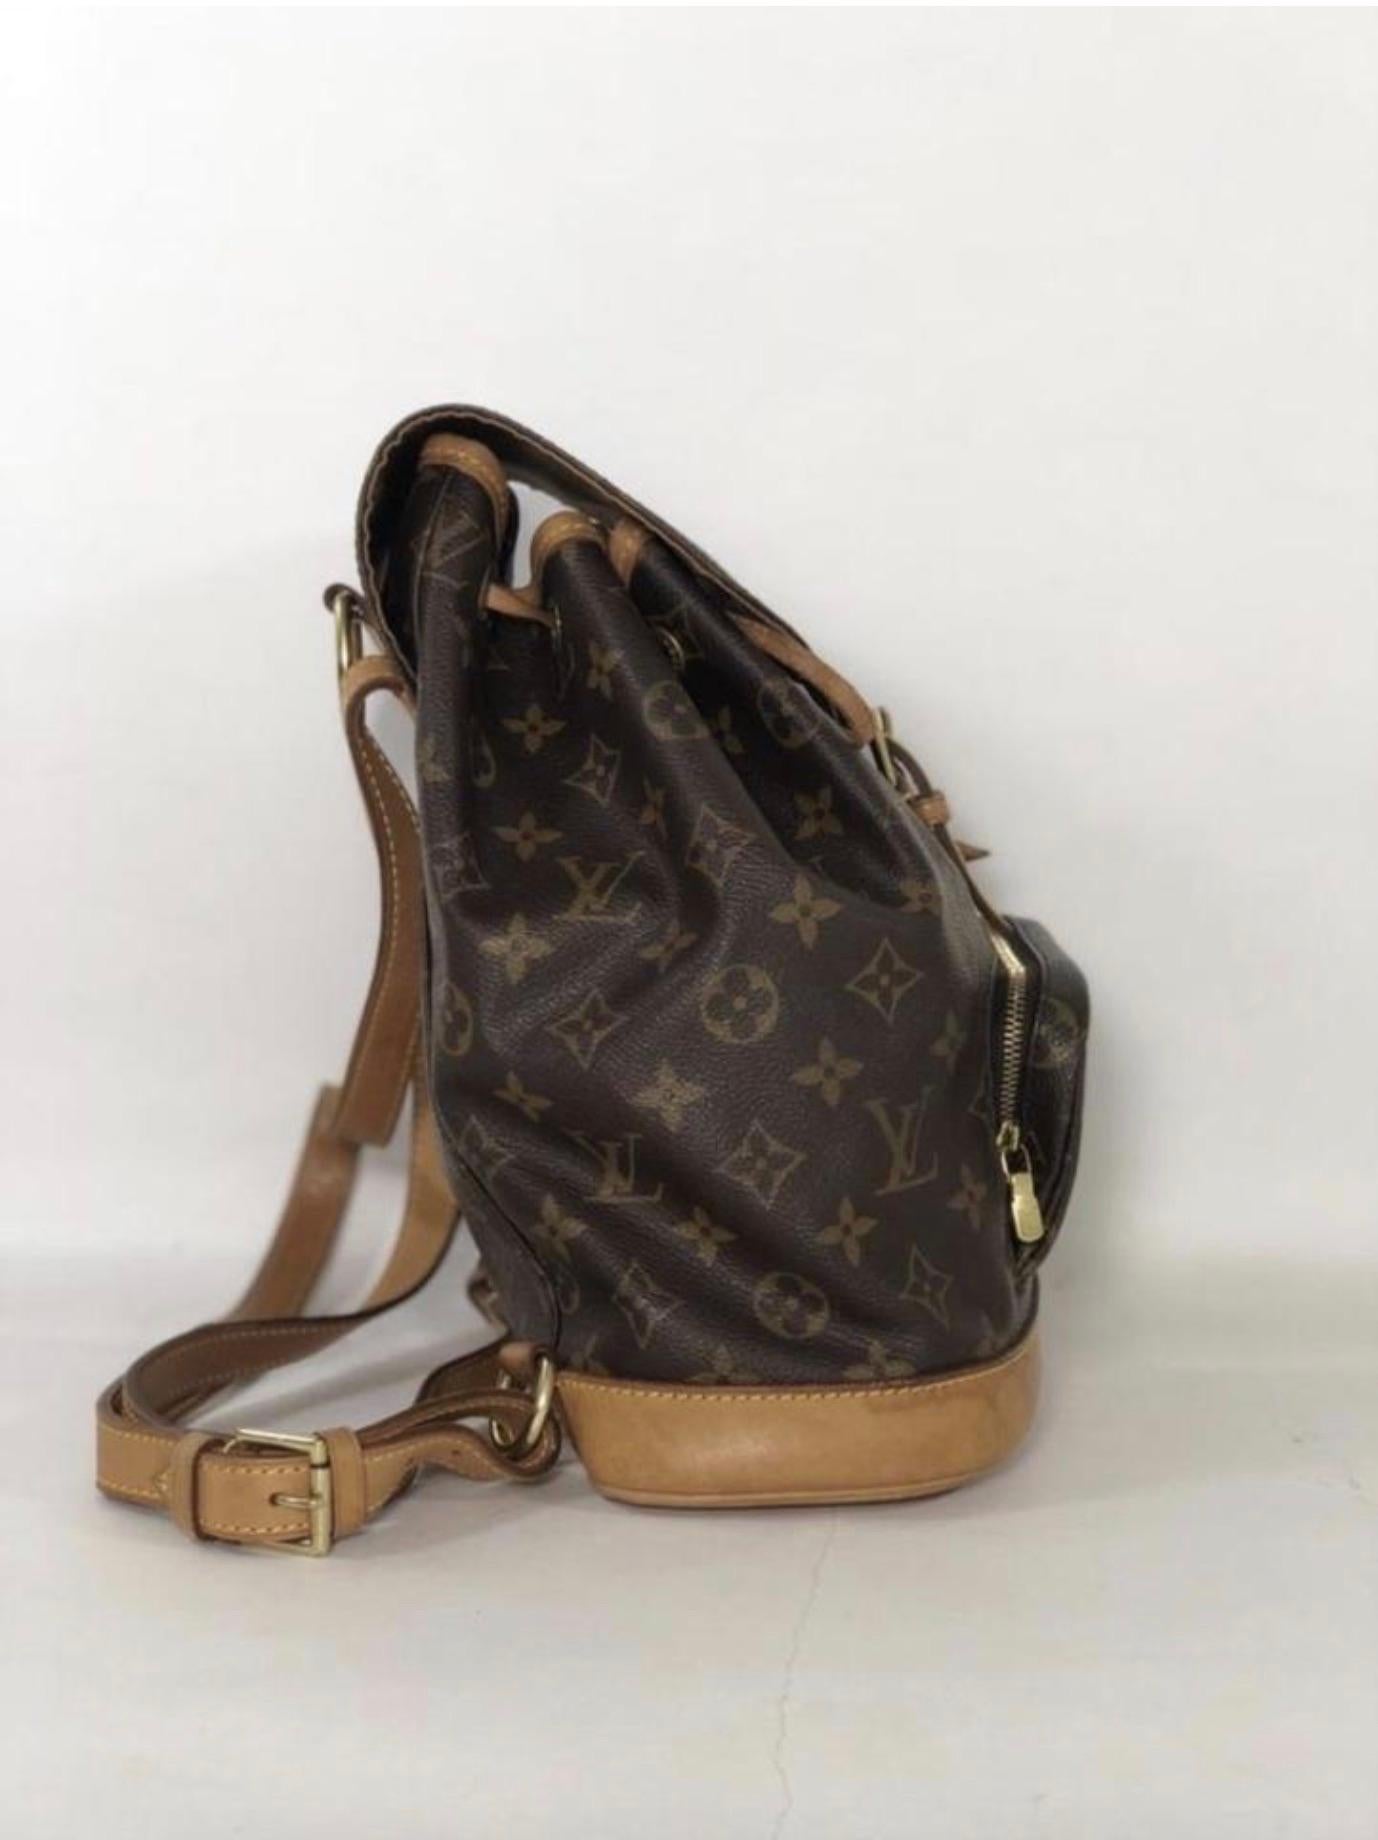  Louis Vuitton Monogram Montsouris MM Backpack Shoulder Handbag In Good Condition For Sale In Saint Charles, IL